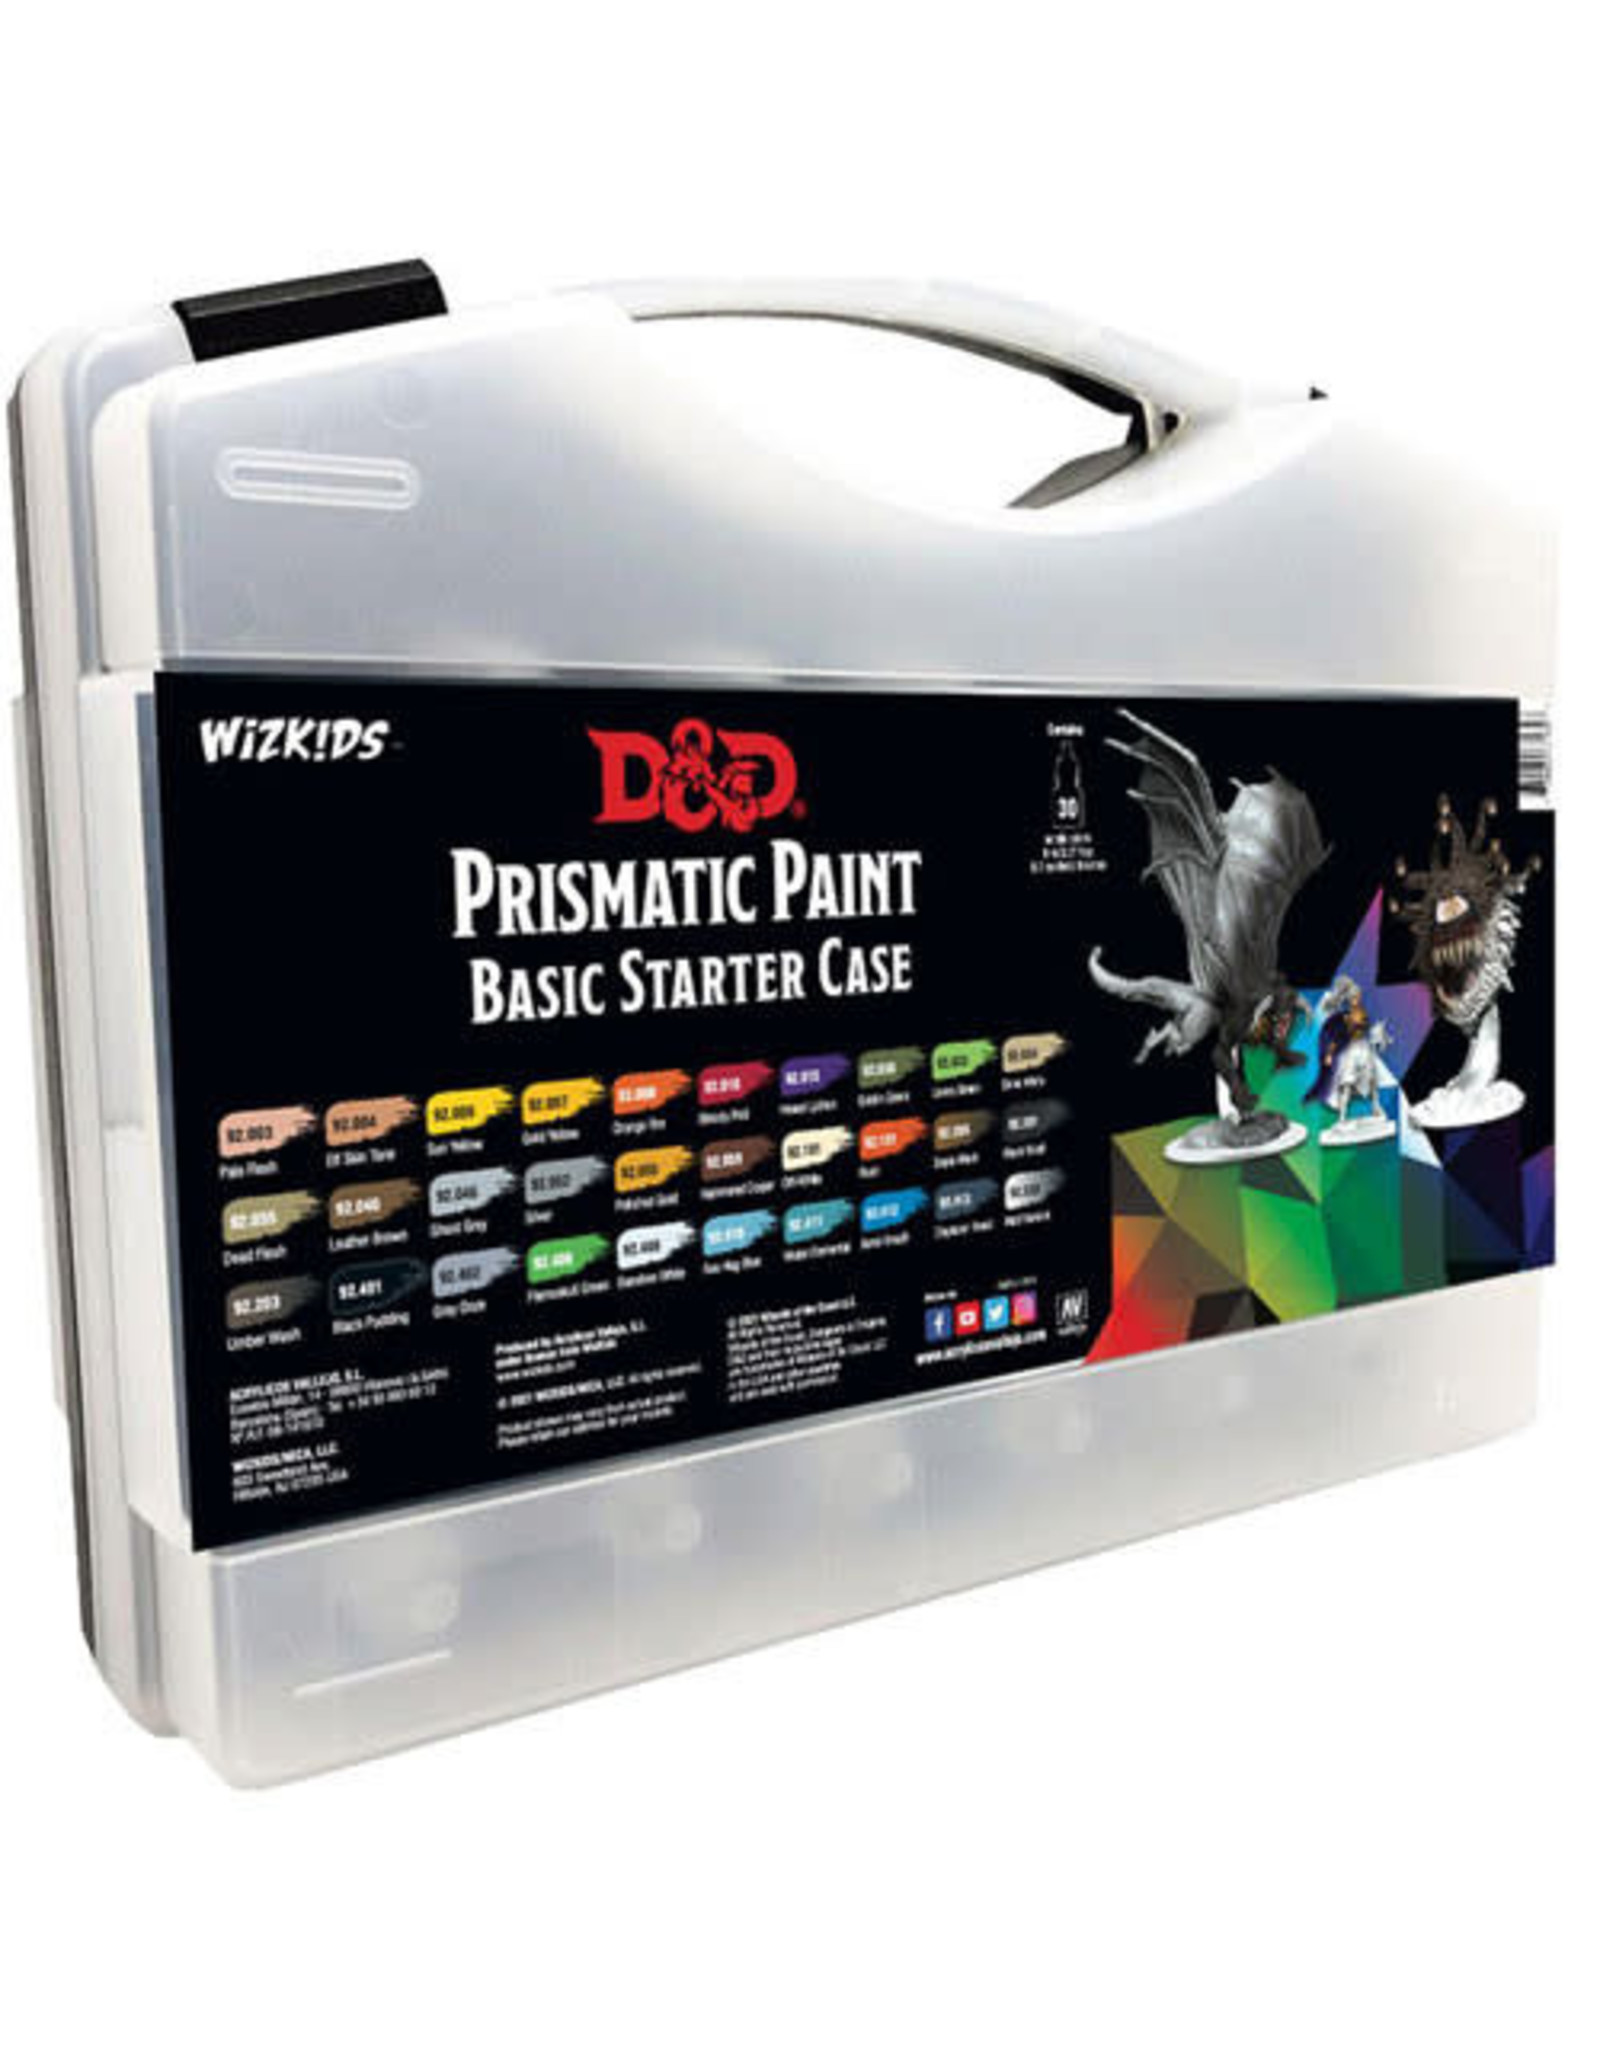 DND Prismatic Paint Basic Starter Case